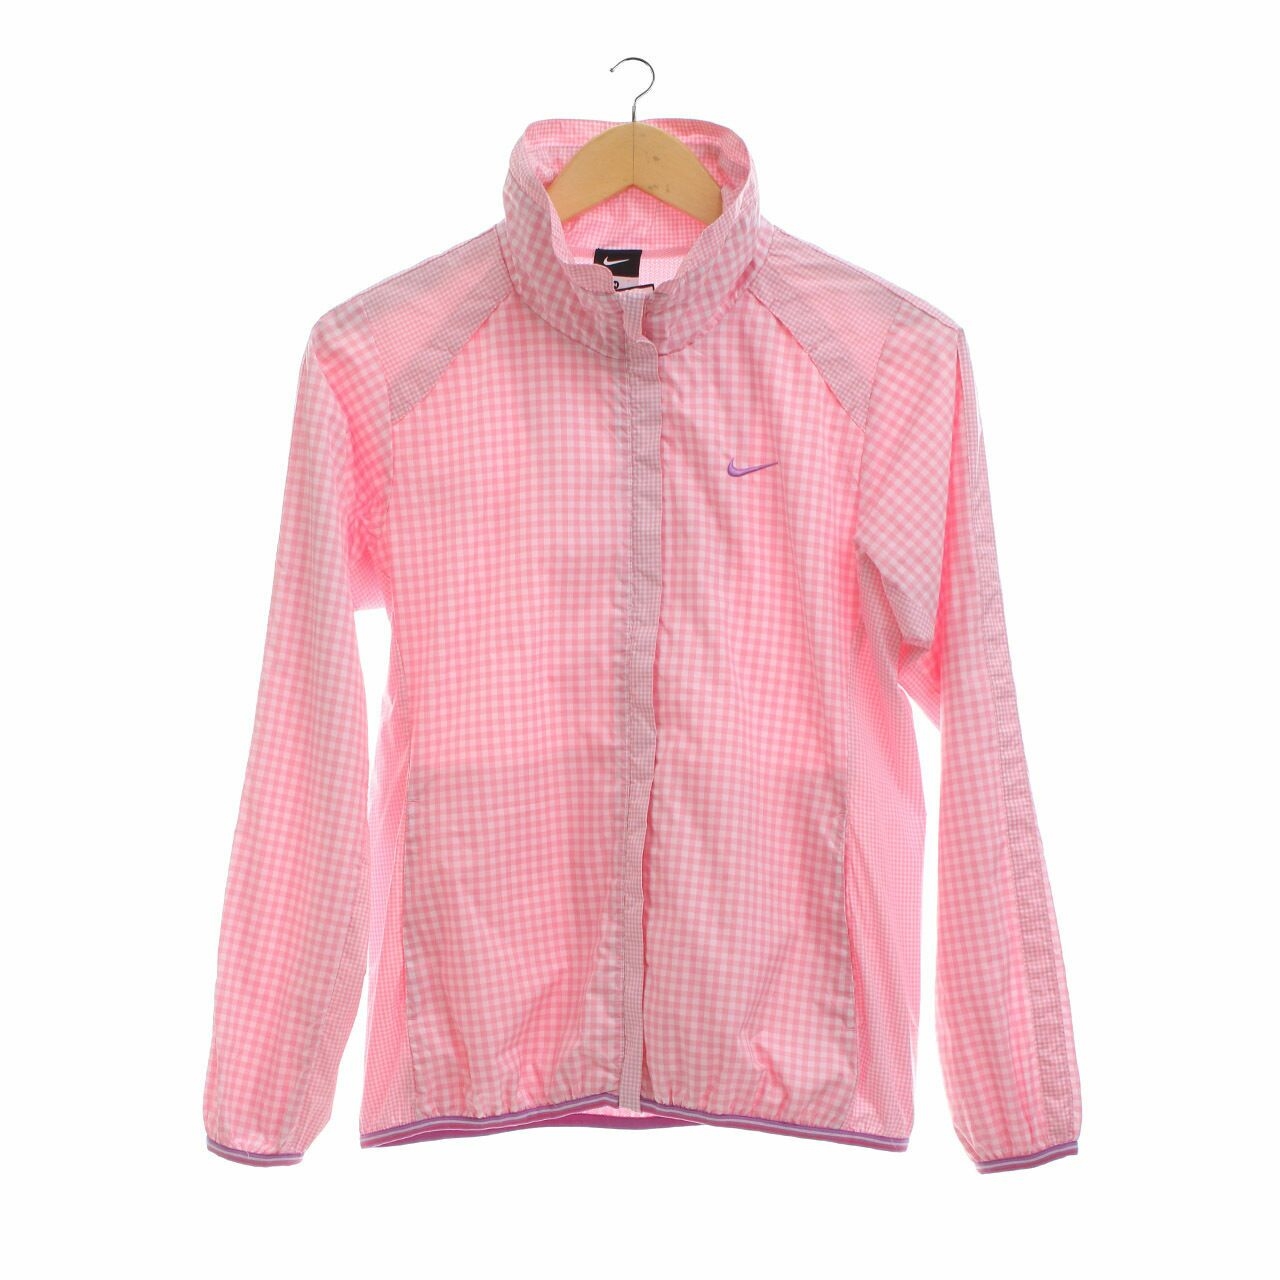 Nike Pink Grid Jacket